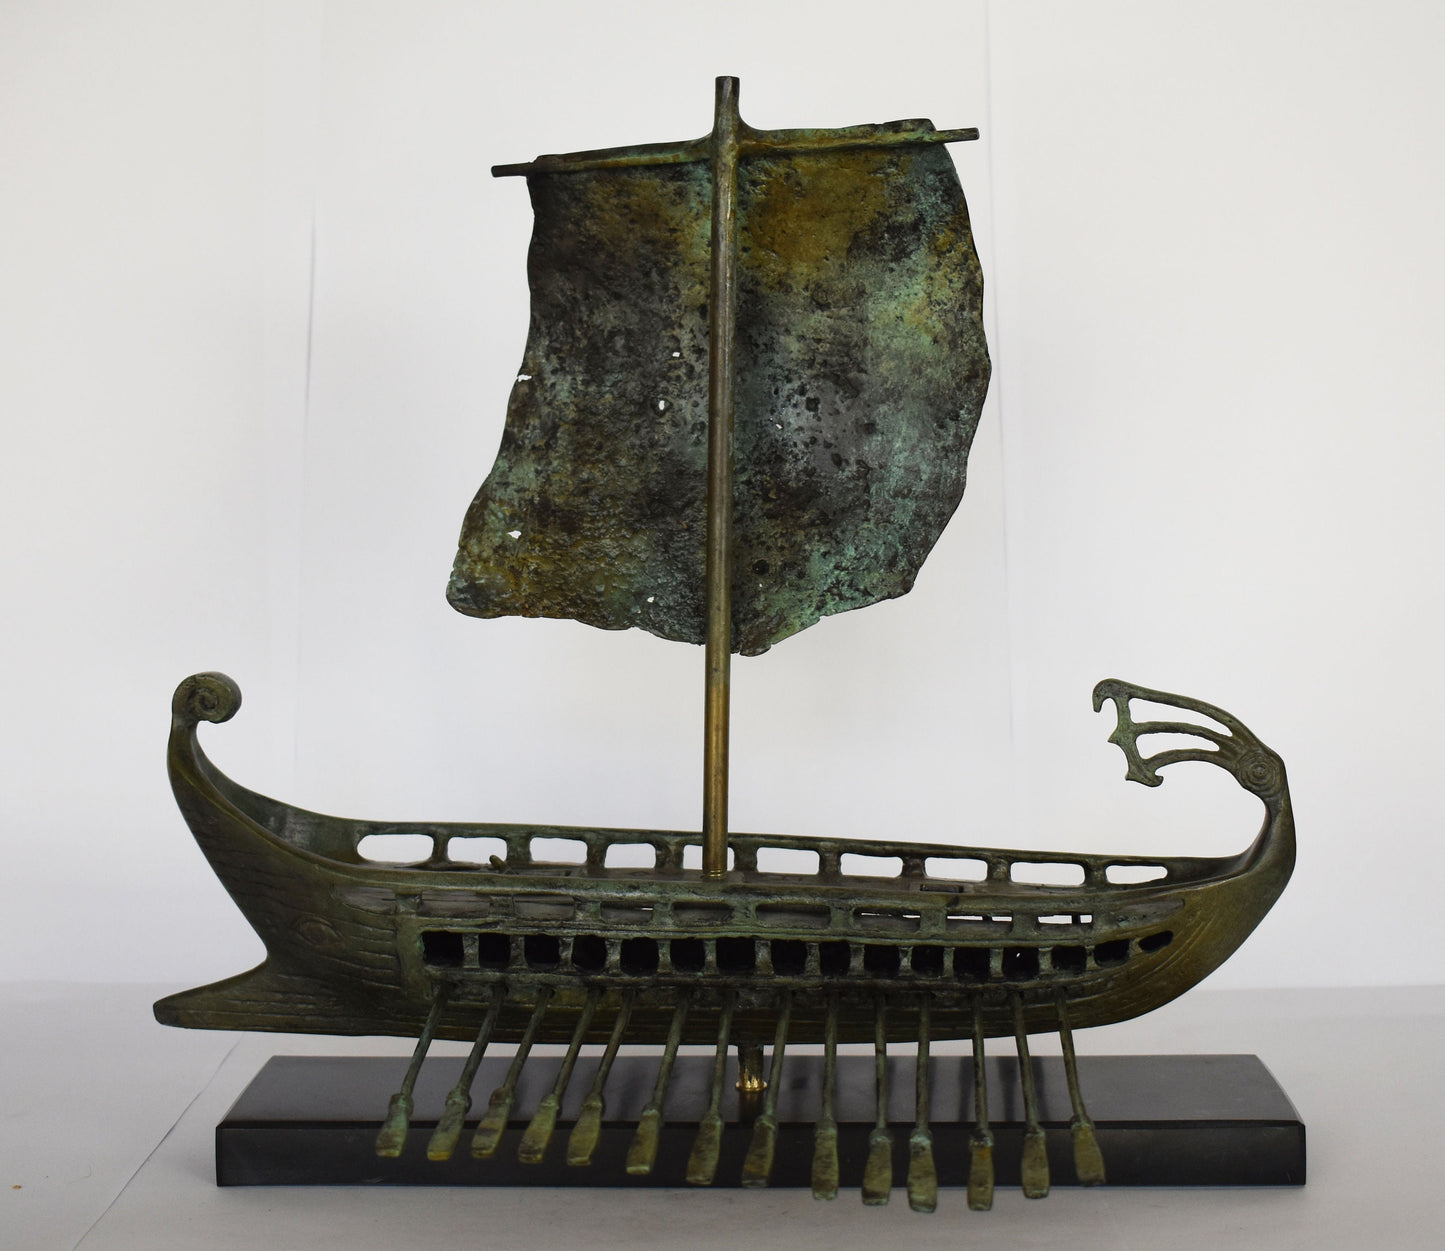 Trireme - Athenian Warship - Greco-Persian War - Salamis Battleship - 480 BC - Marble Base - pure Bronze  statue